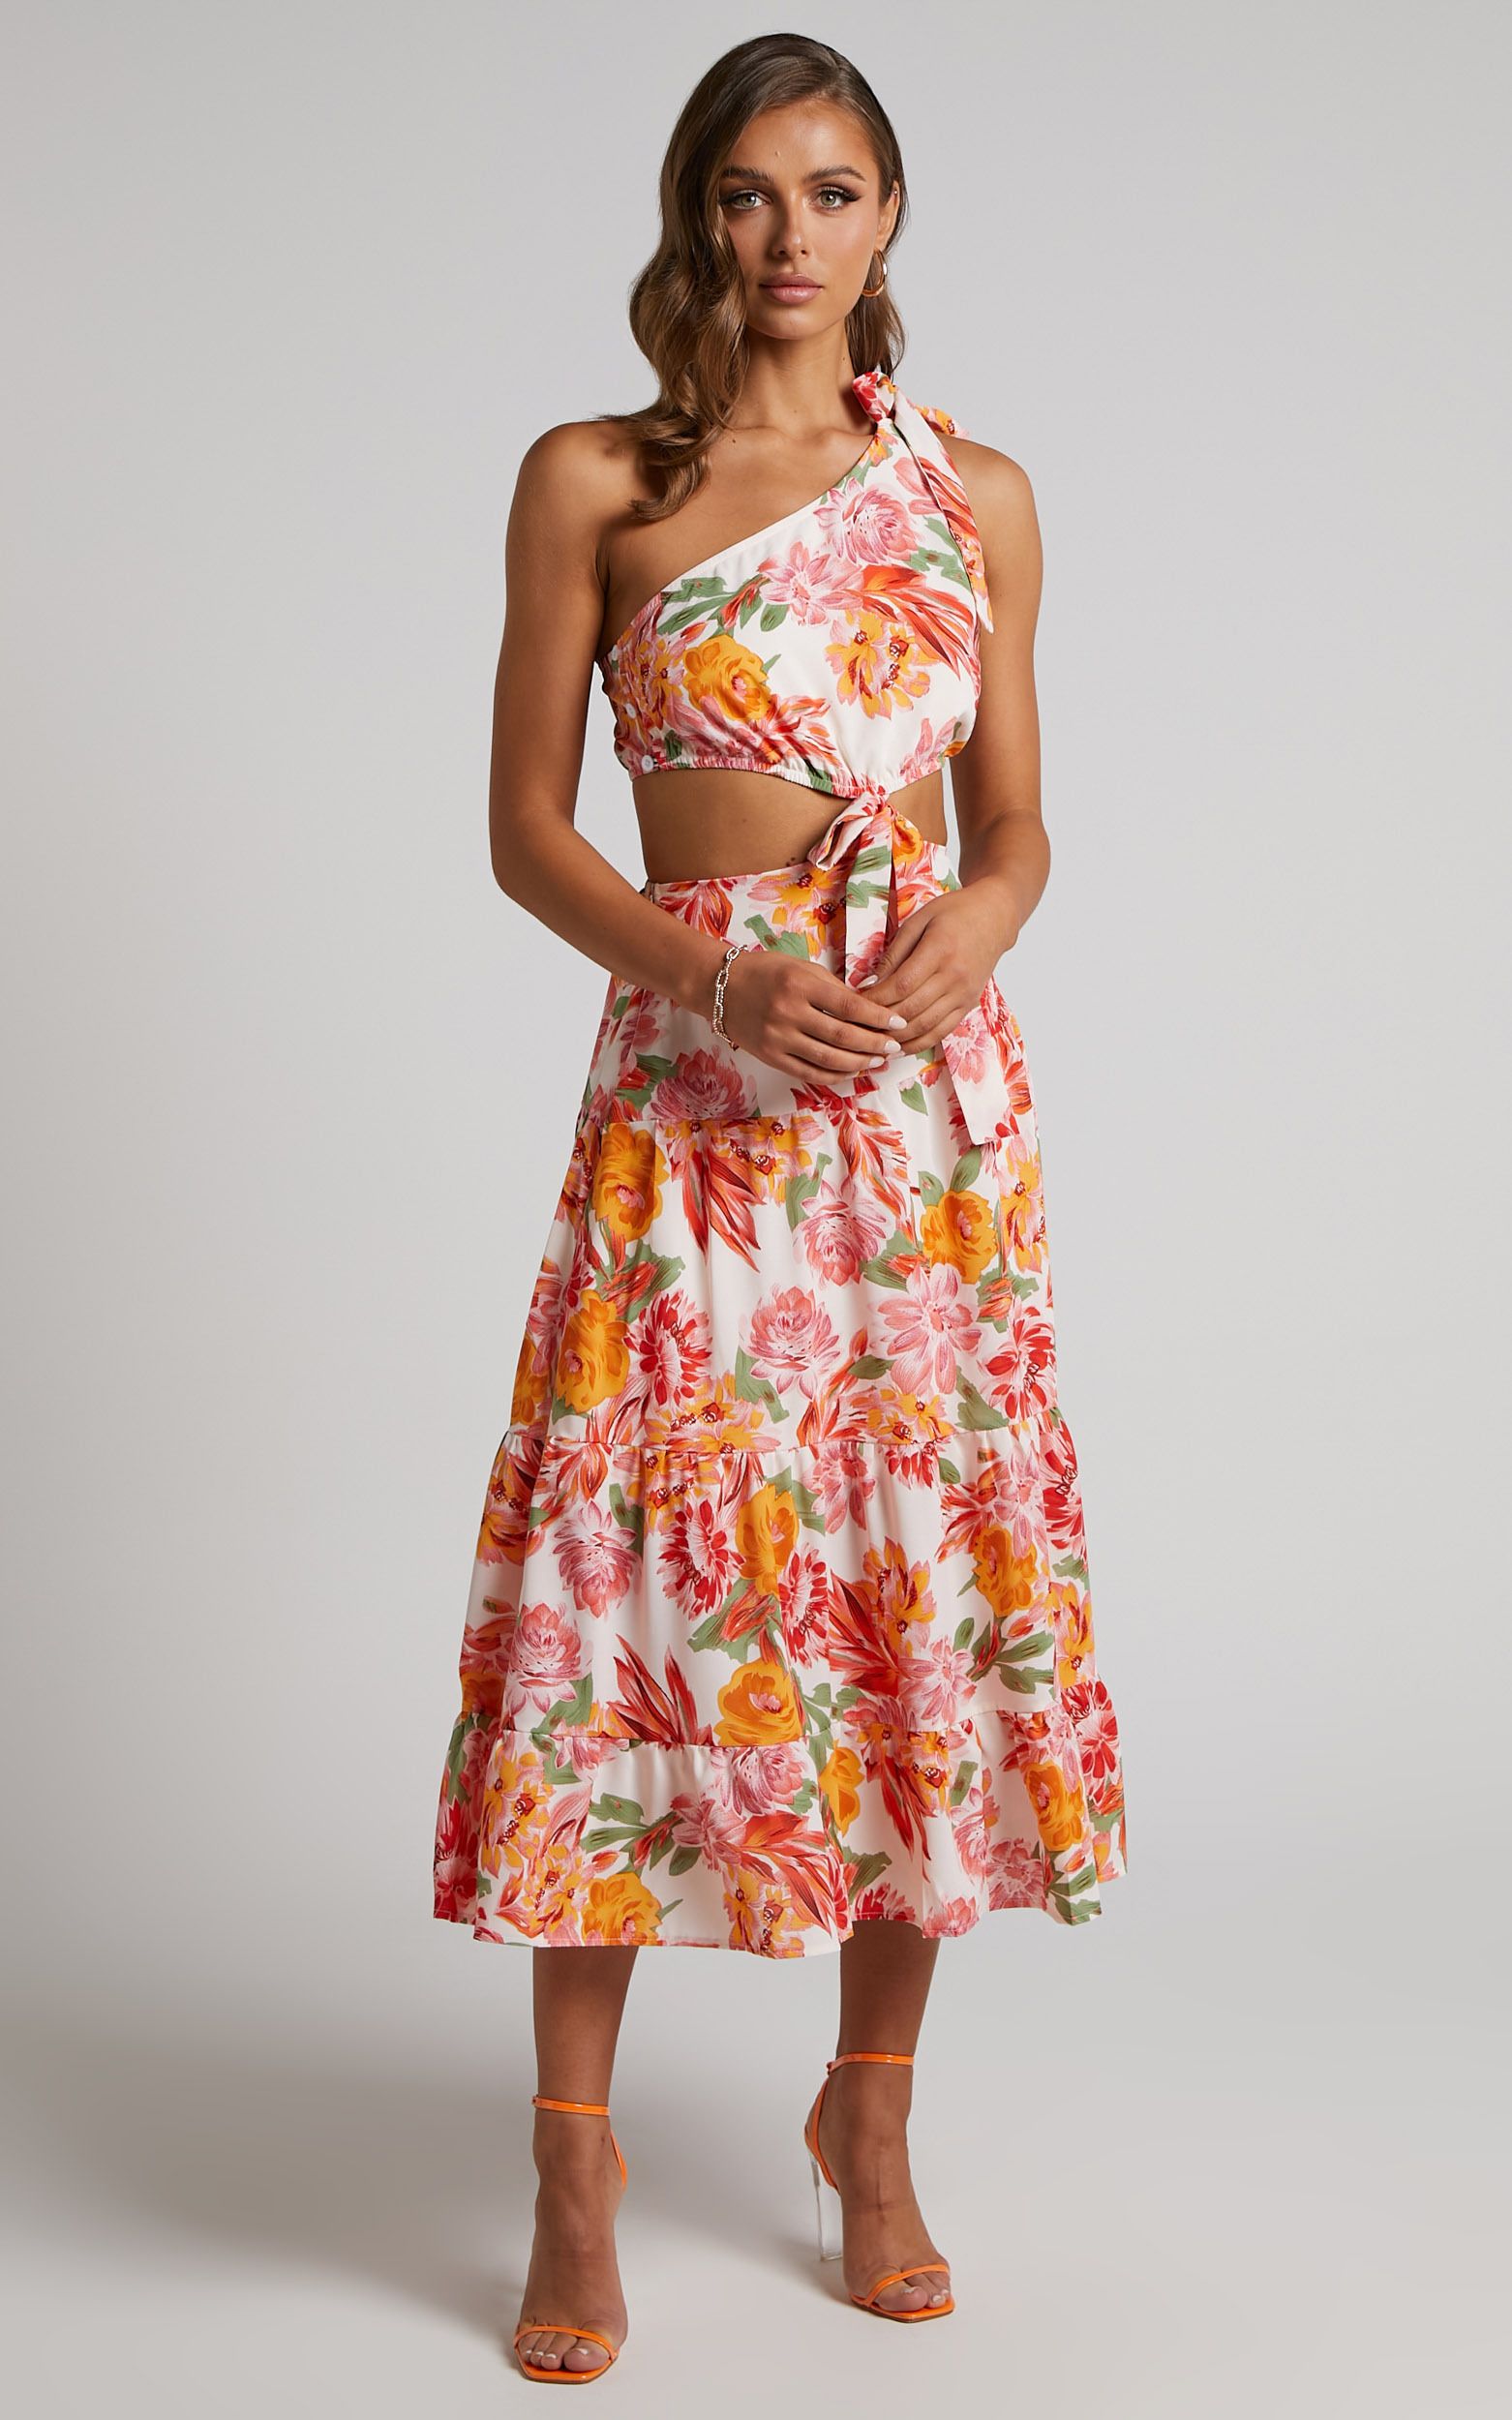 Amabella Maxi Dress - Tie One Shoulder Cut Out Dress in Orange Floral | Showpo (US, UK & Europe)